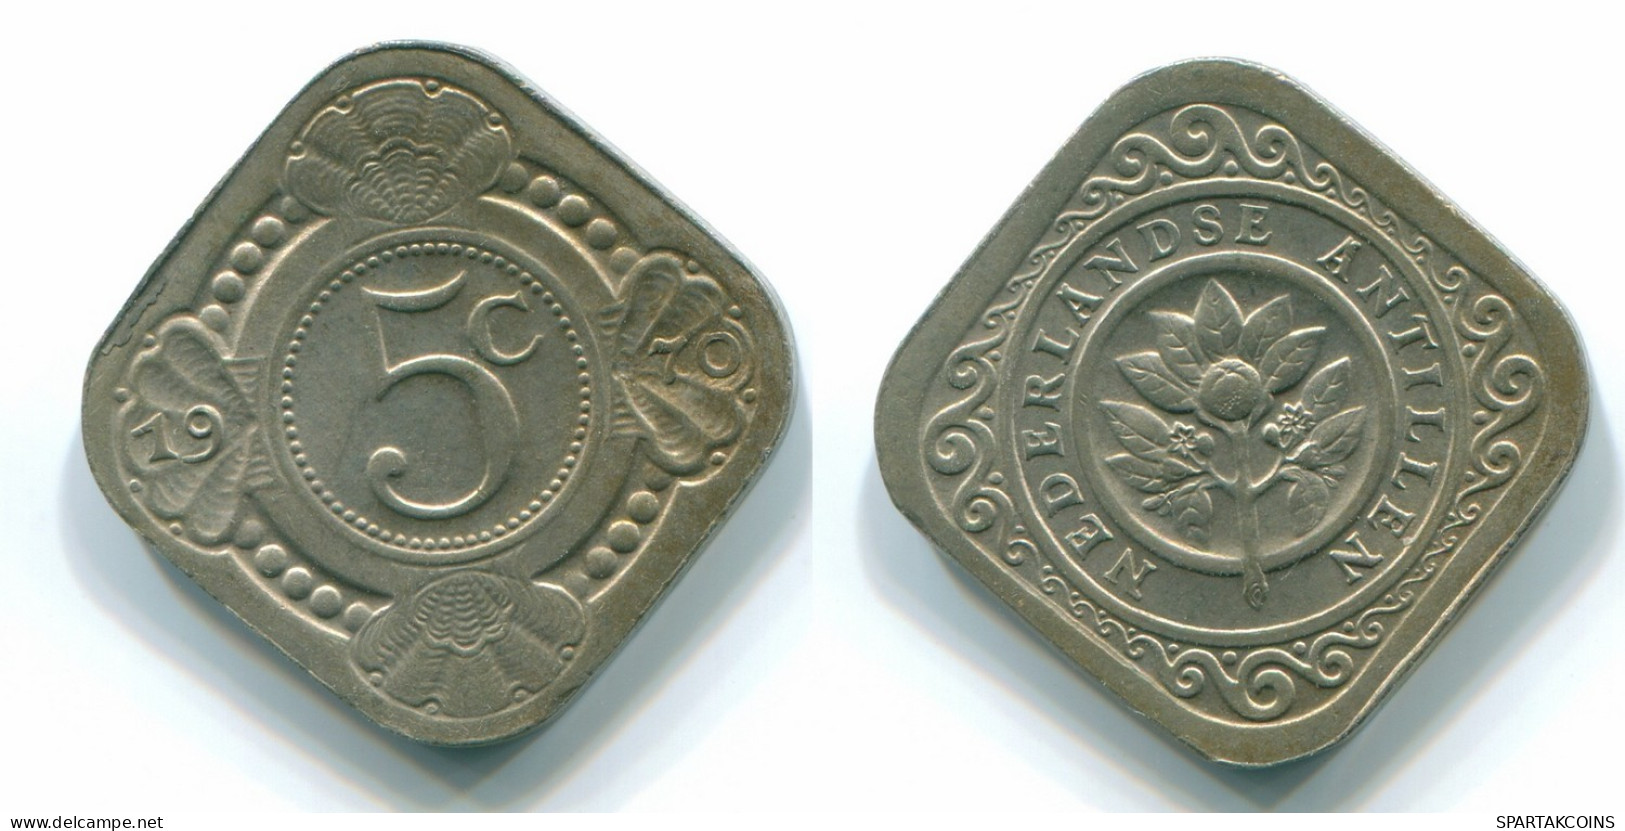 5 CENTS 1970 ANTILLES NÉERLANDAISES Nickel Colonial Pièce #S12518.F.A - Antilles Néerlandaises